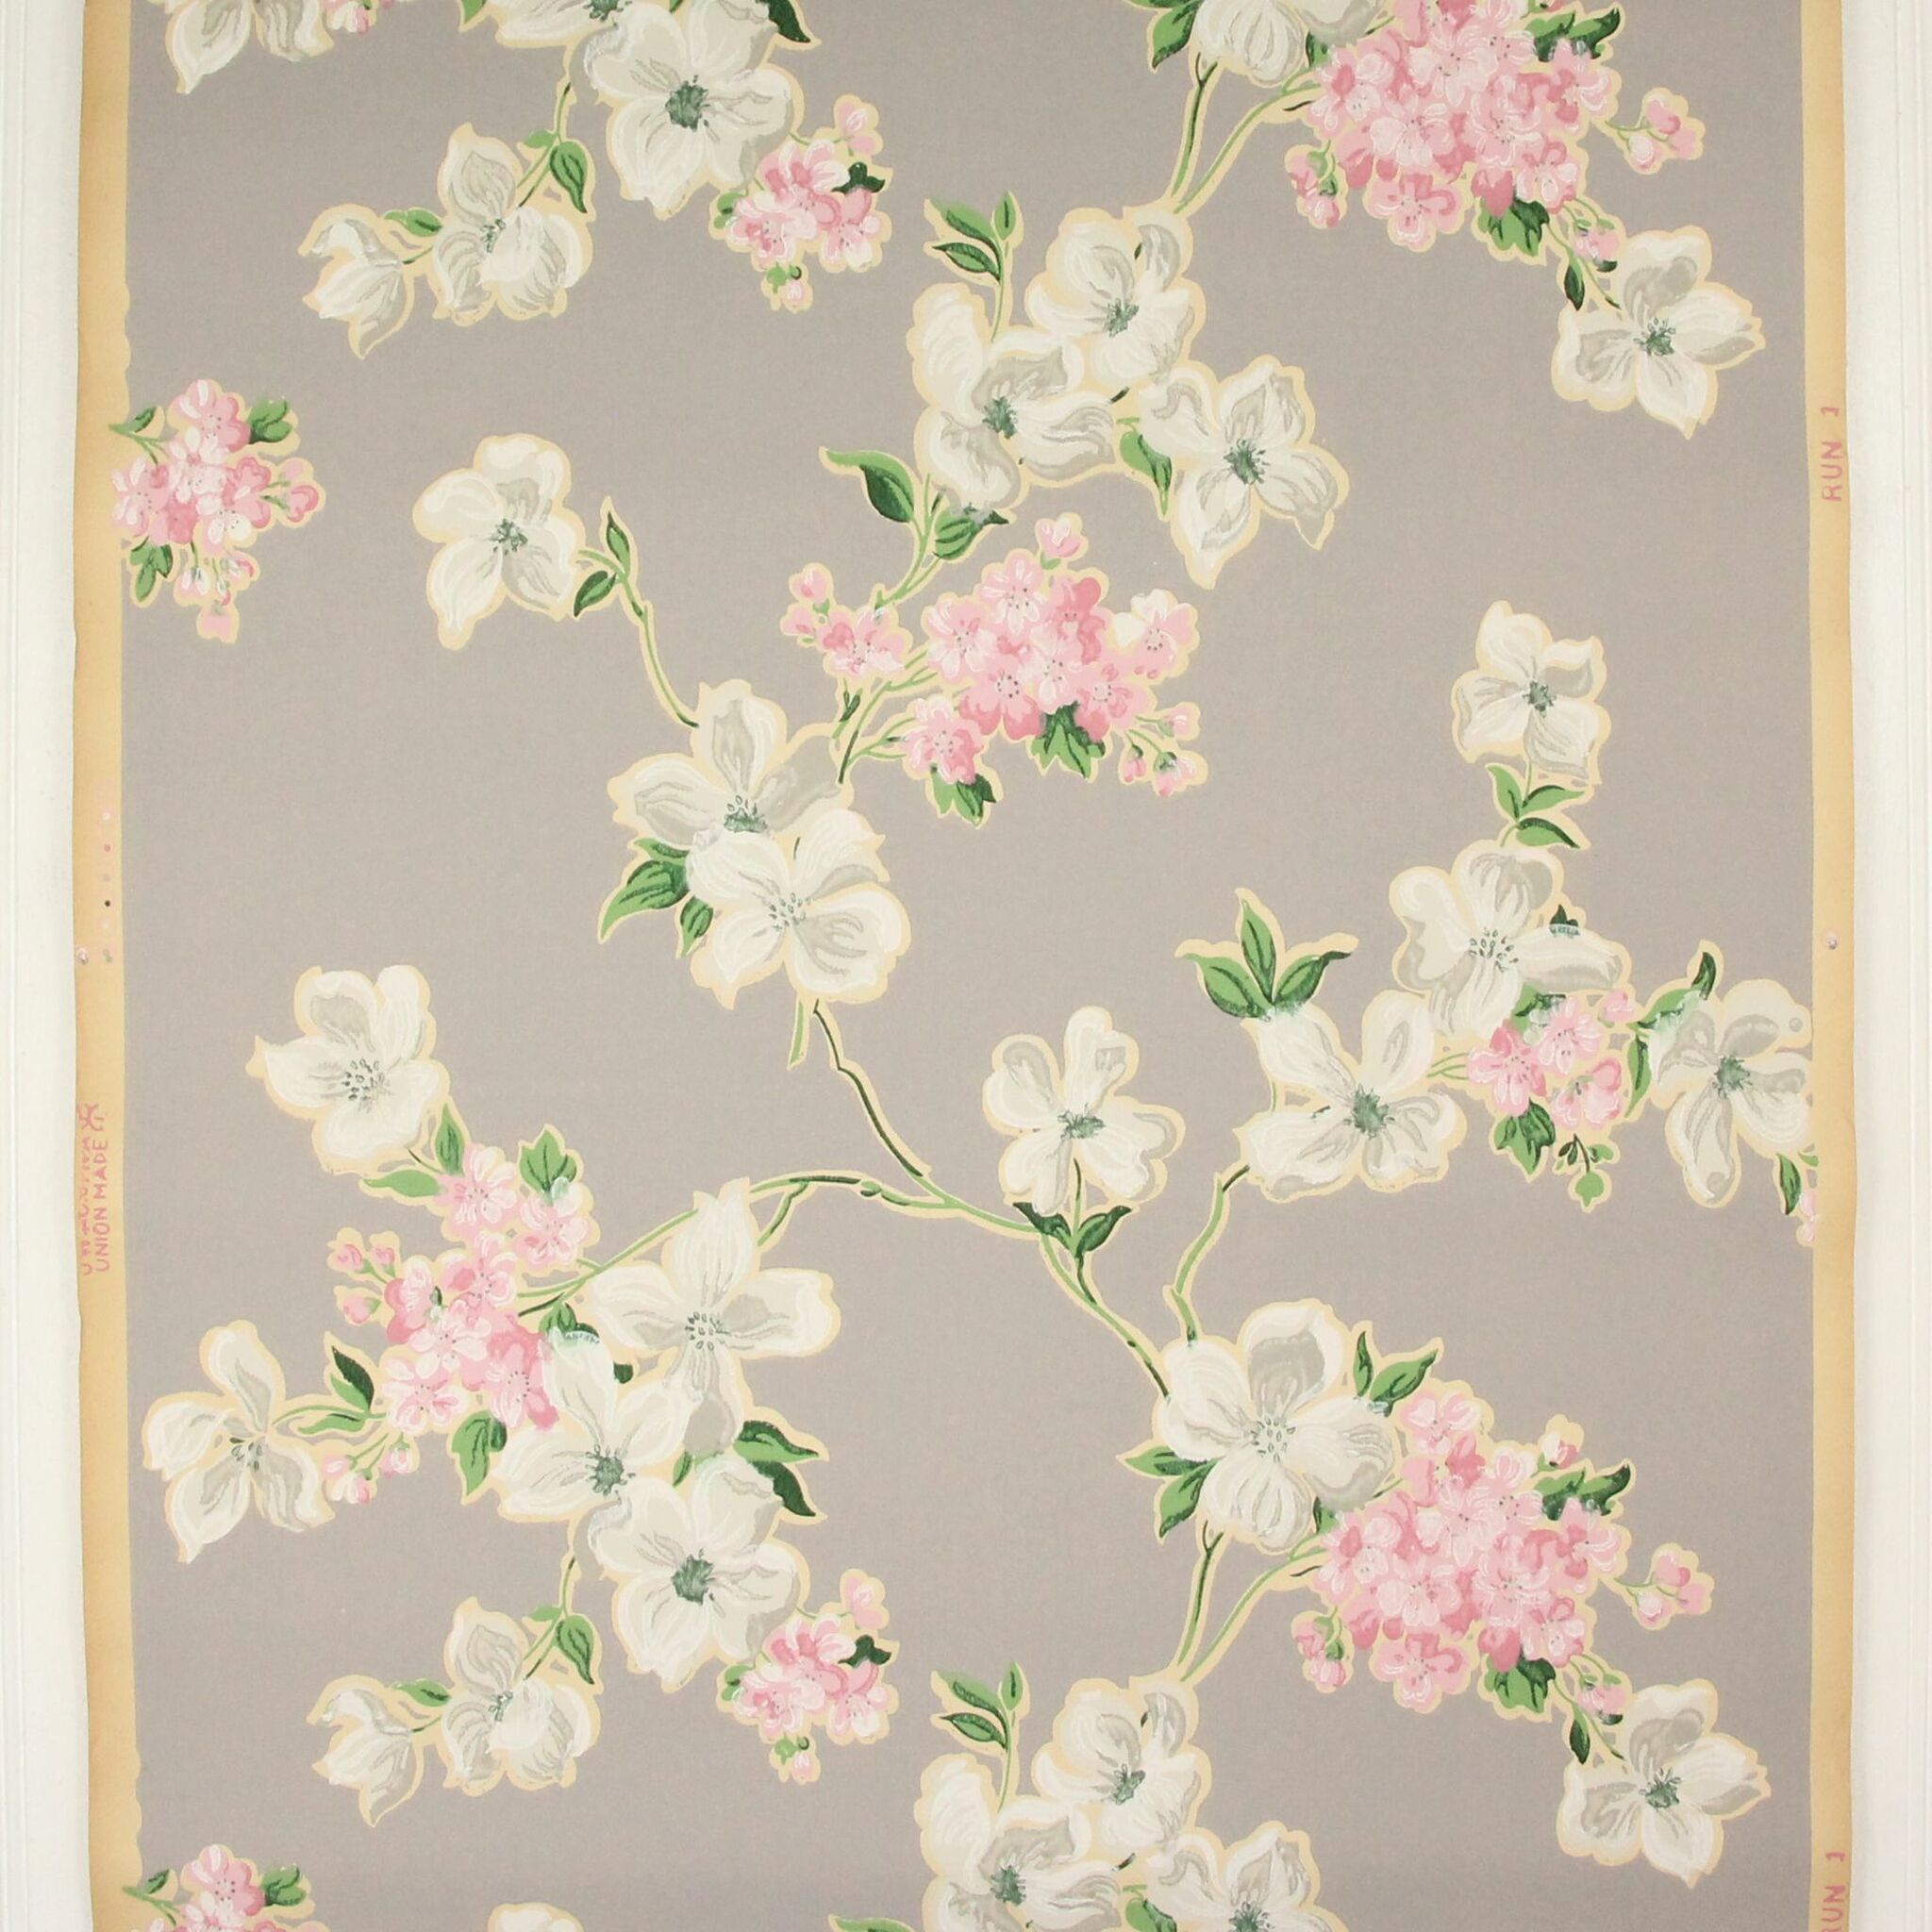 1930s Vintage Wallpaper Pink White Flowers on Gray's Vintage Wallpaper